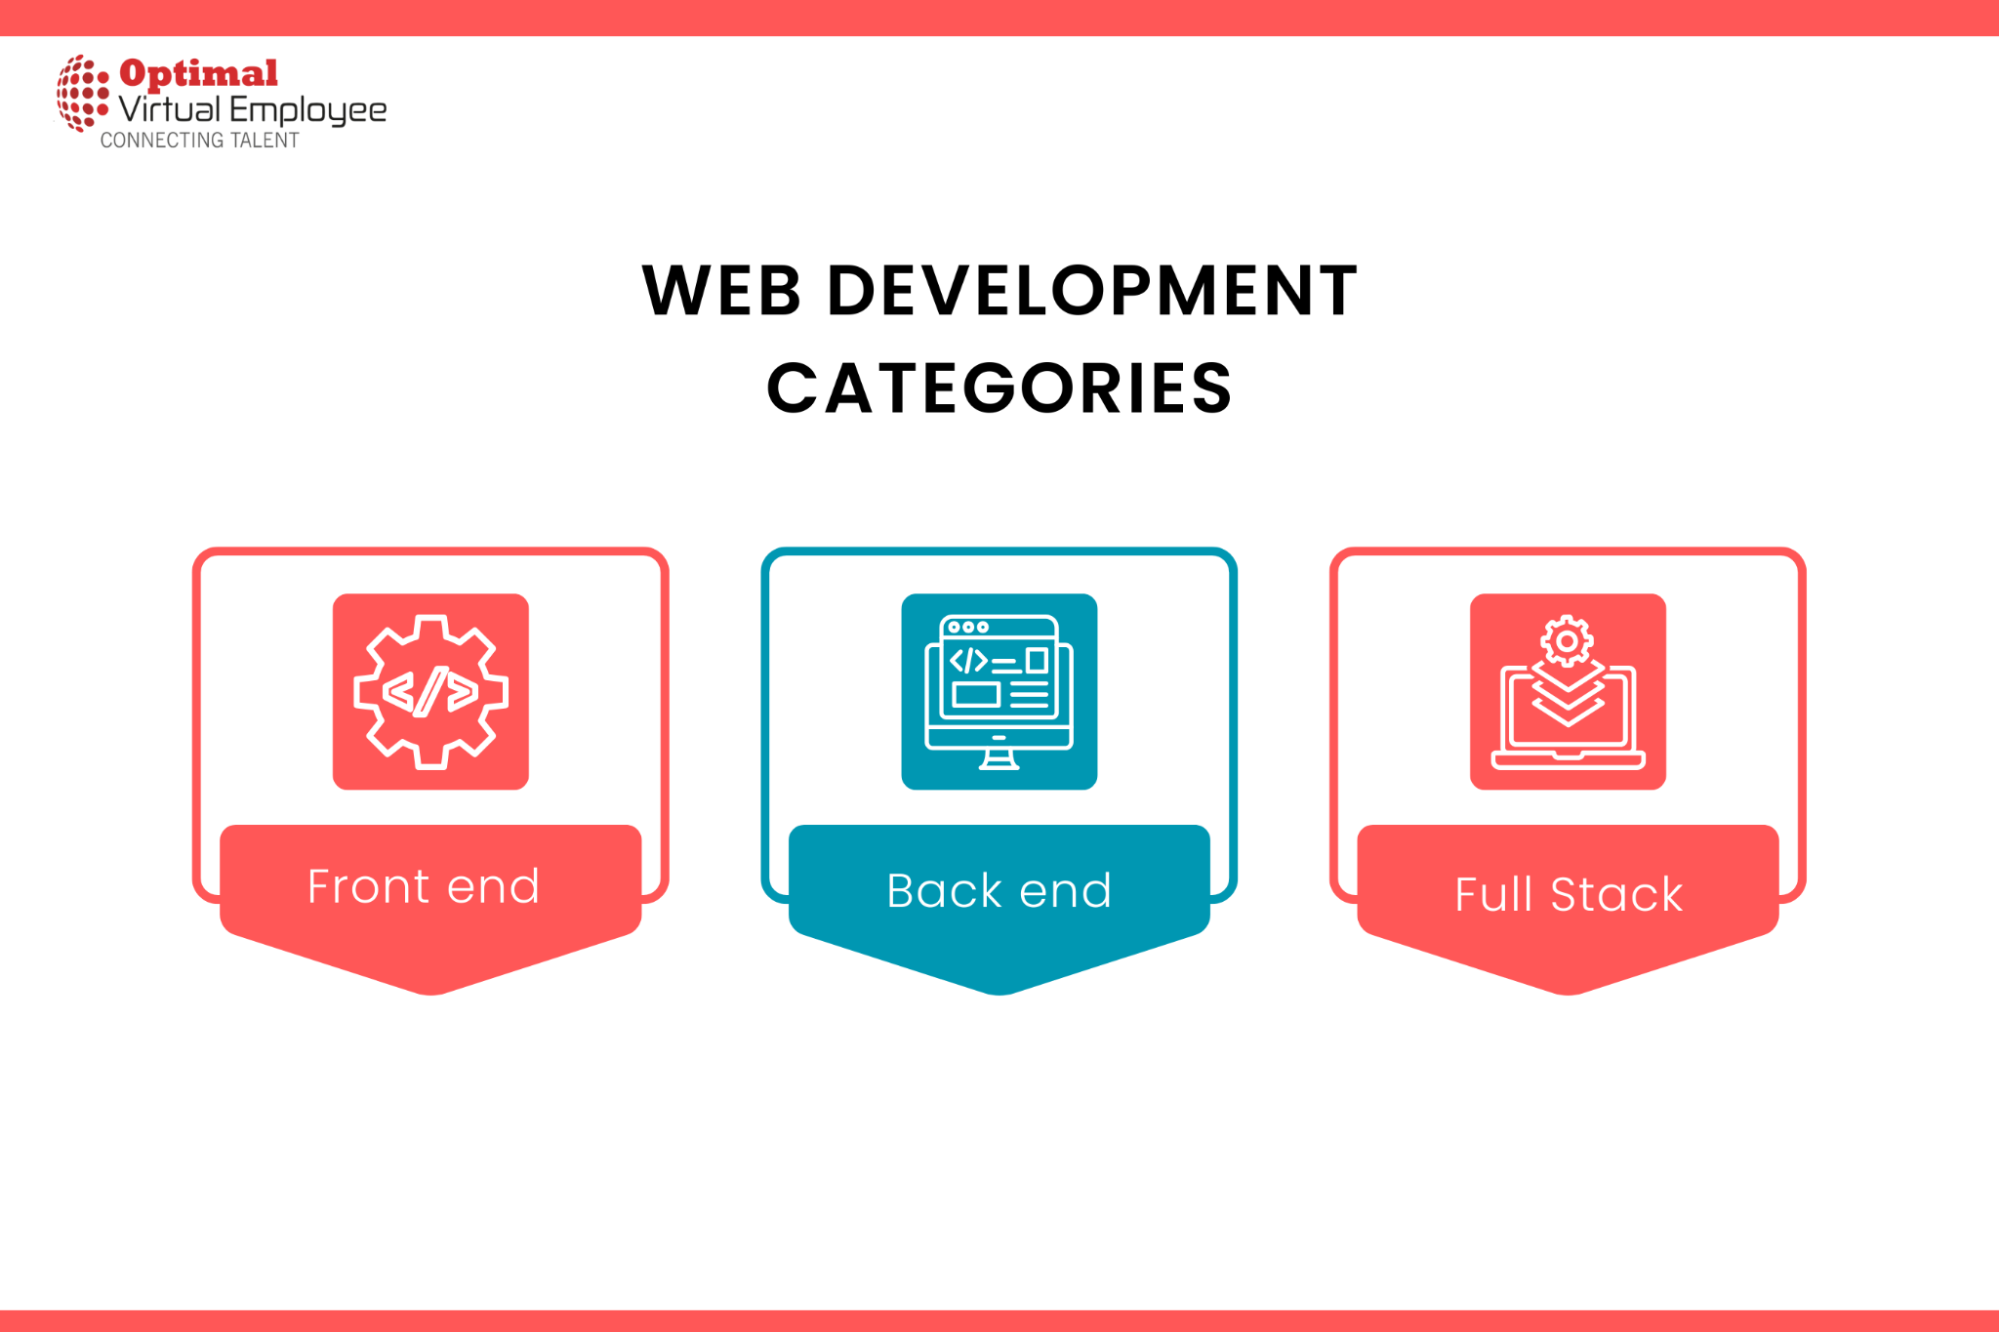 Categories of Web Development